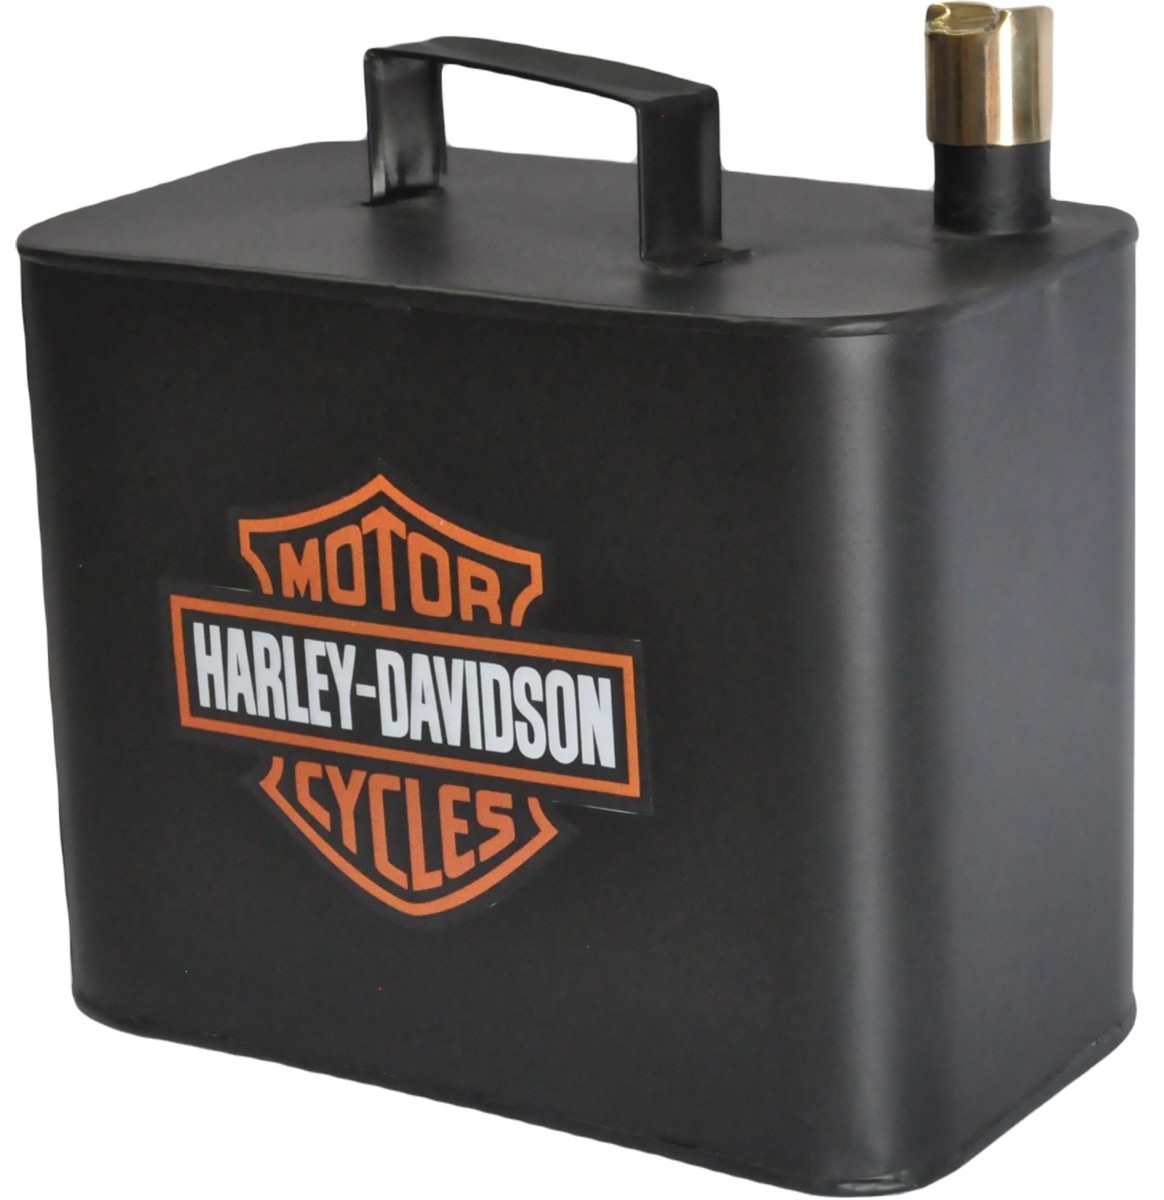 Harley Davidson Oil Can